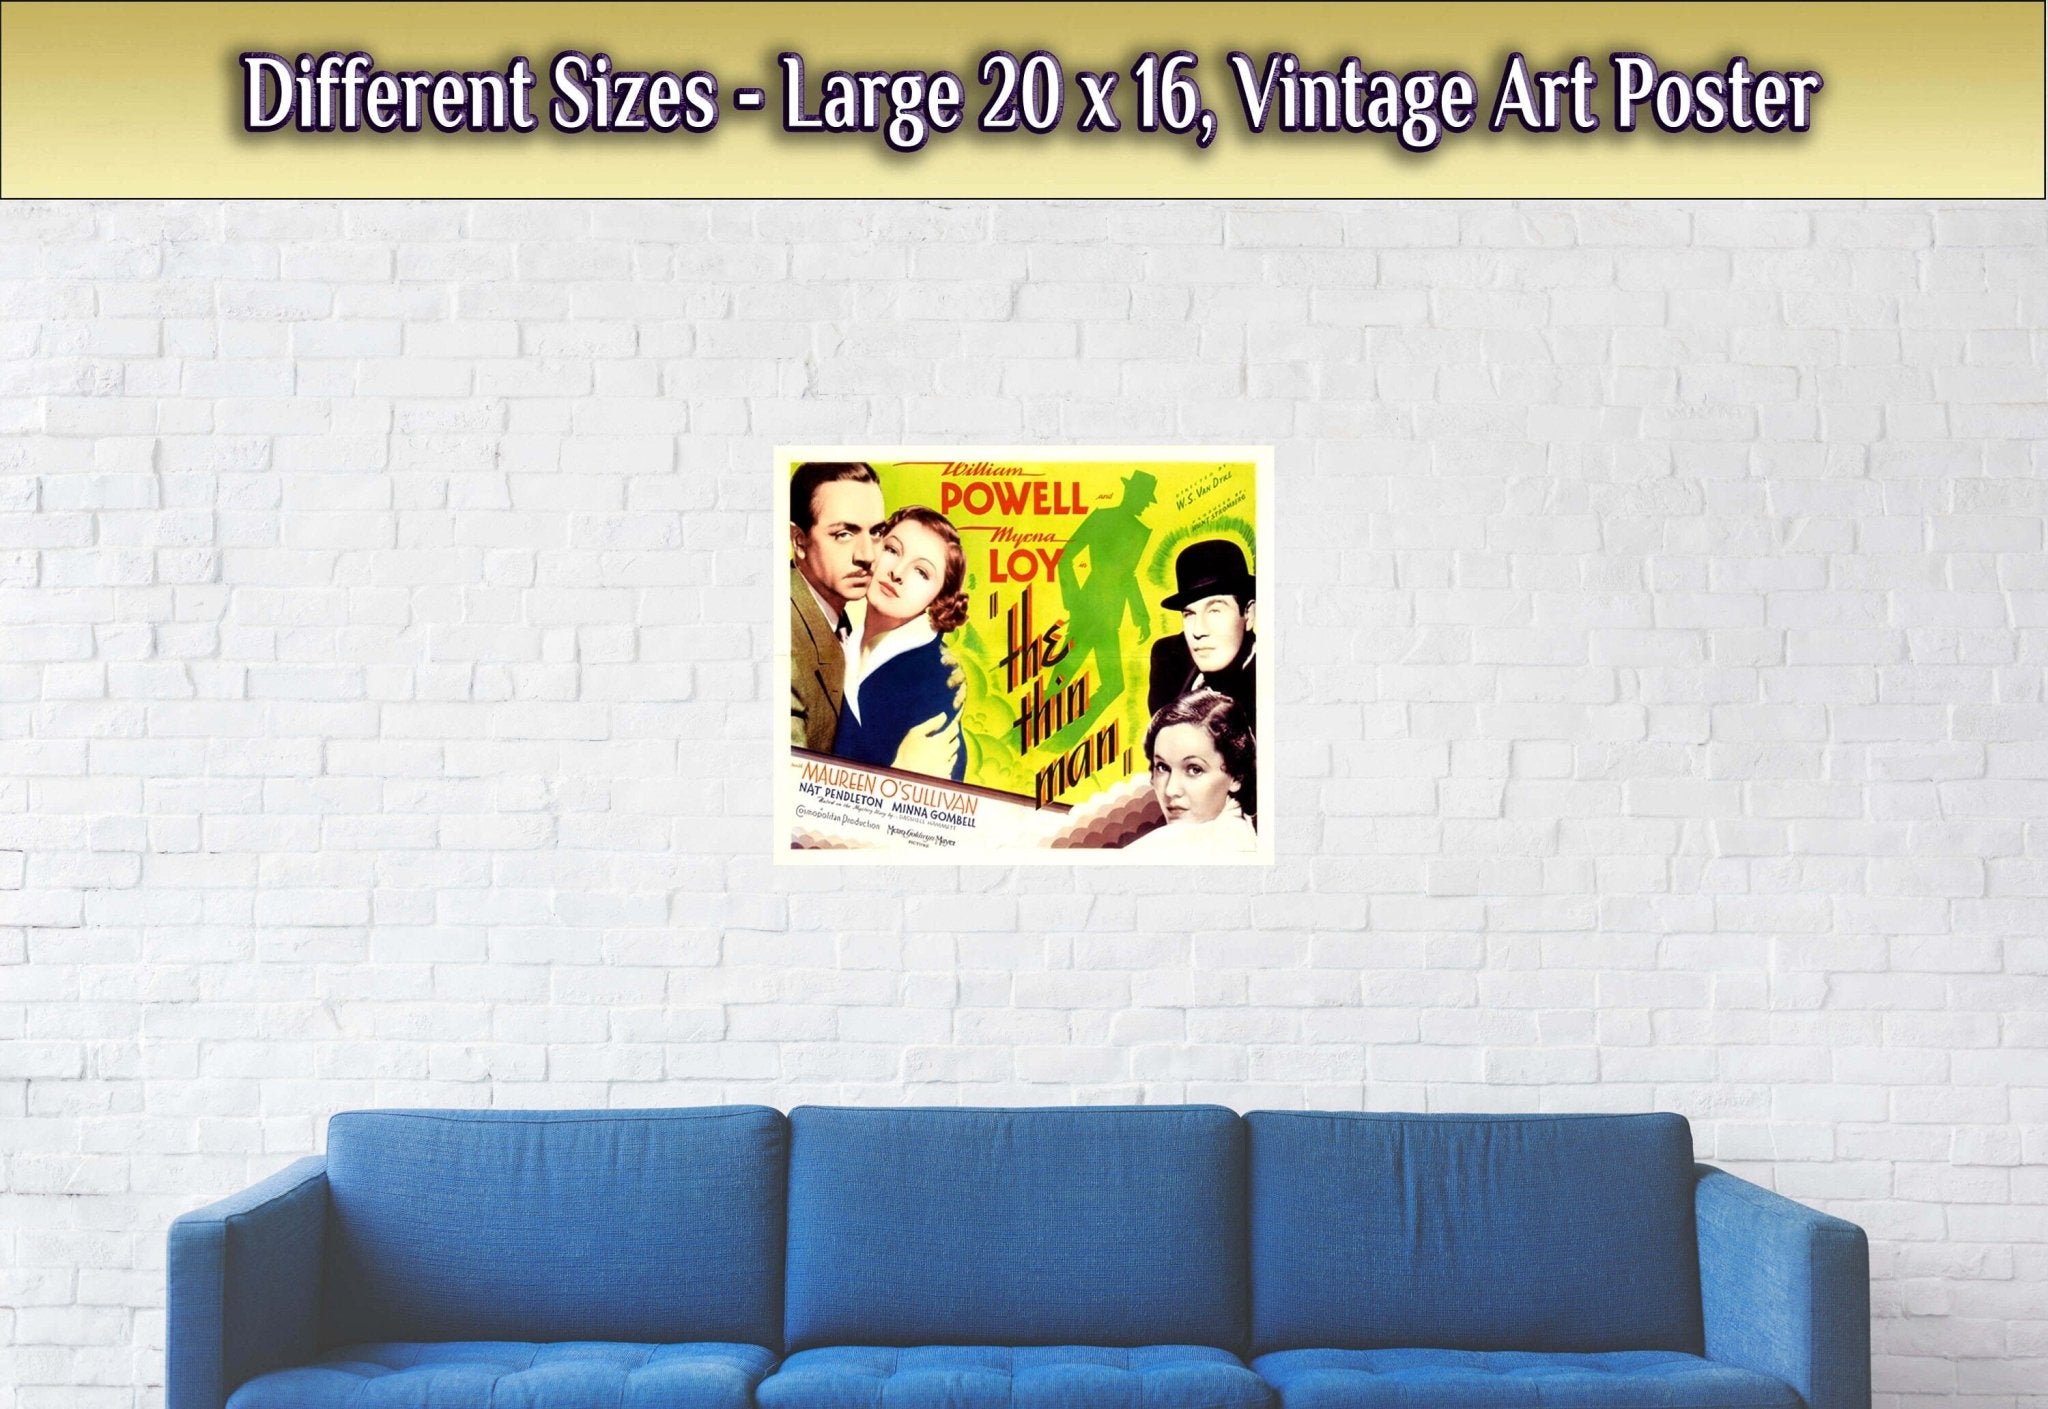 The Thin Man Poster, Vintage Movie Poster 1934 Poster Film Art - Maureen O'Sullivan, Myrna Loy, William Powell - WallArtPrints4U